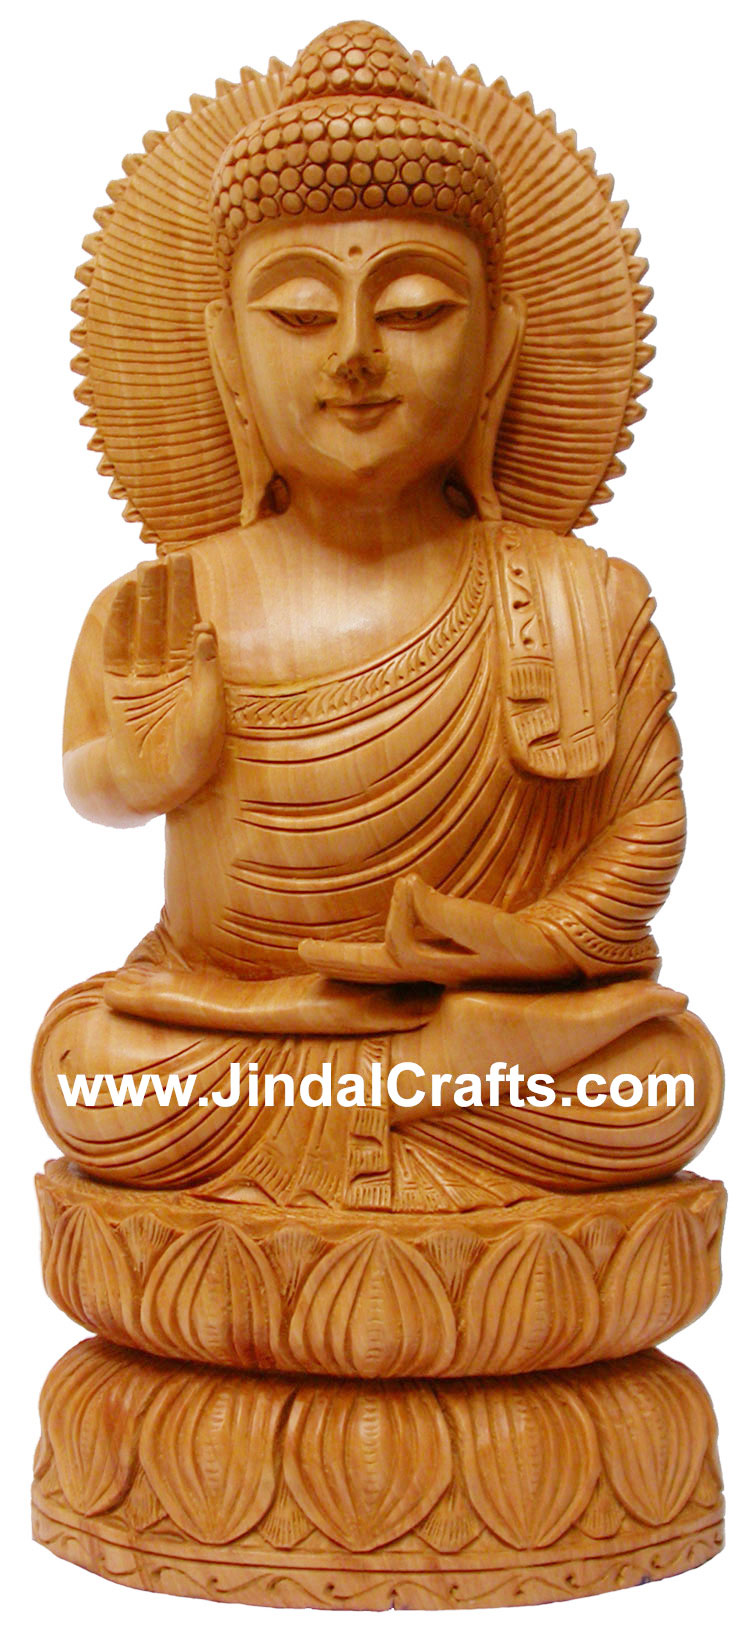 Handmade Buddha Statue Lotus Carvings Unique Indian Art Buddhism Sculpture Murti